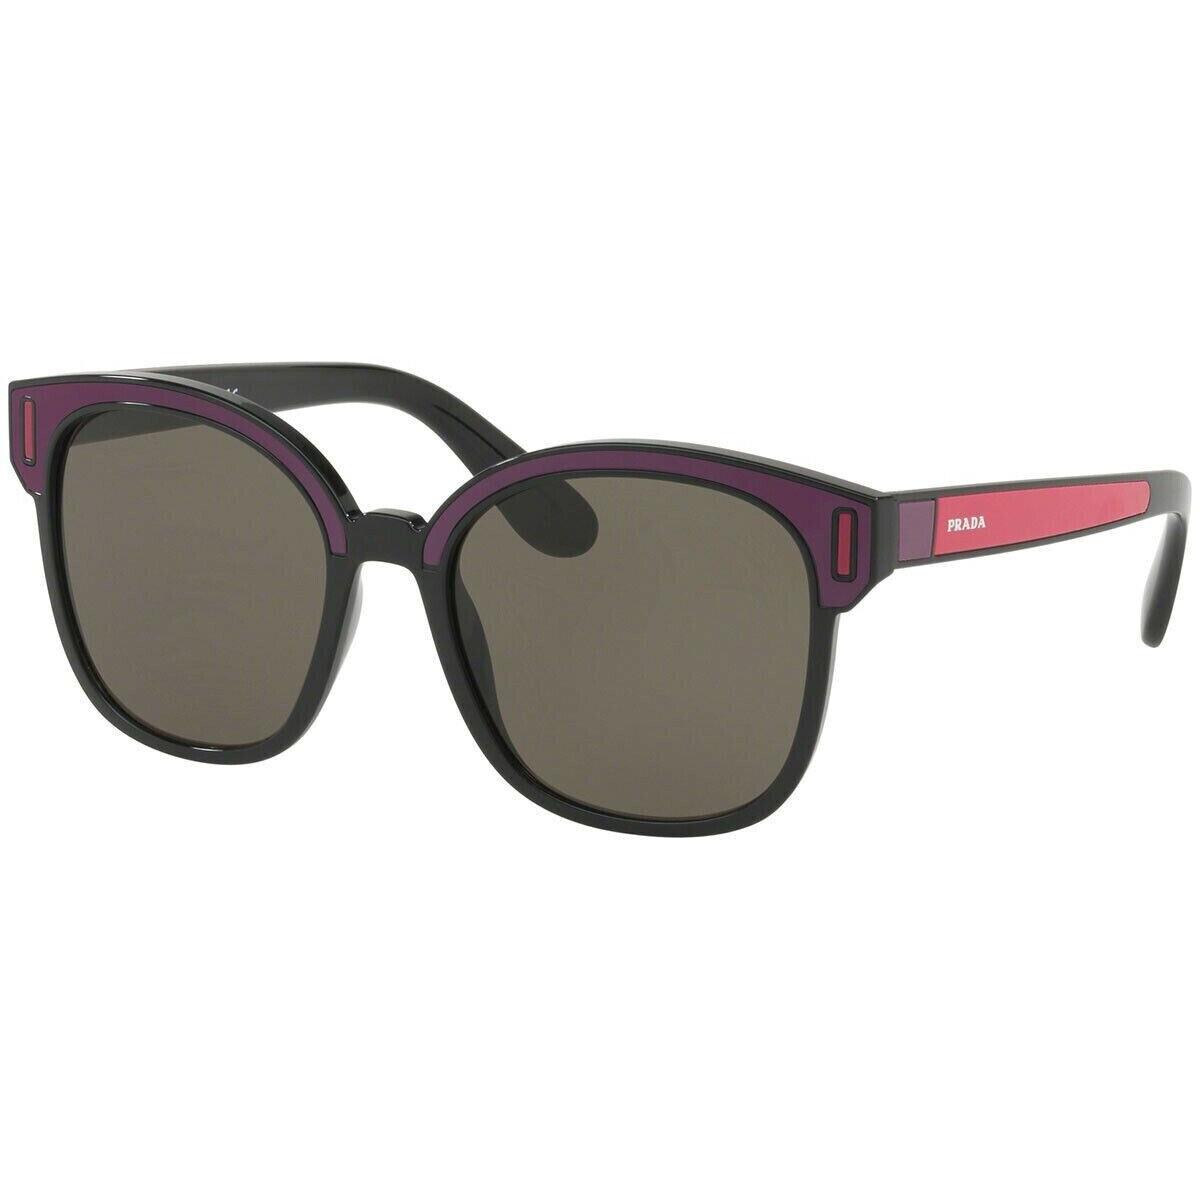 Prada PR 05US SSA5S2 Sunglasses Black/brown 53 mm